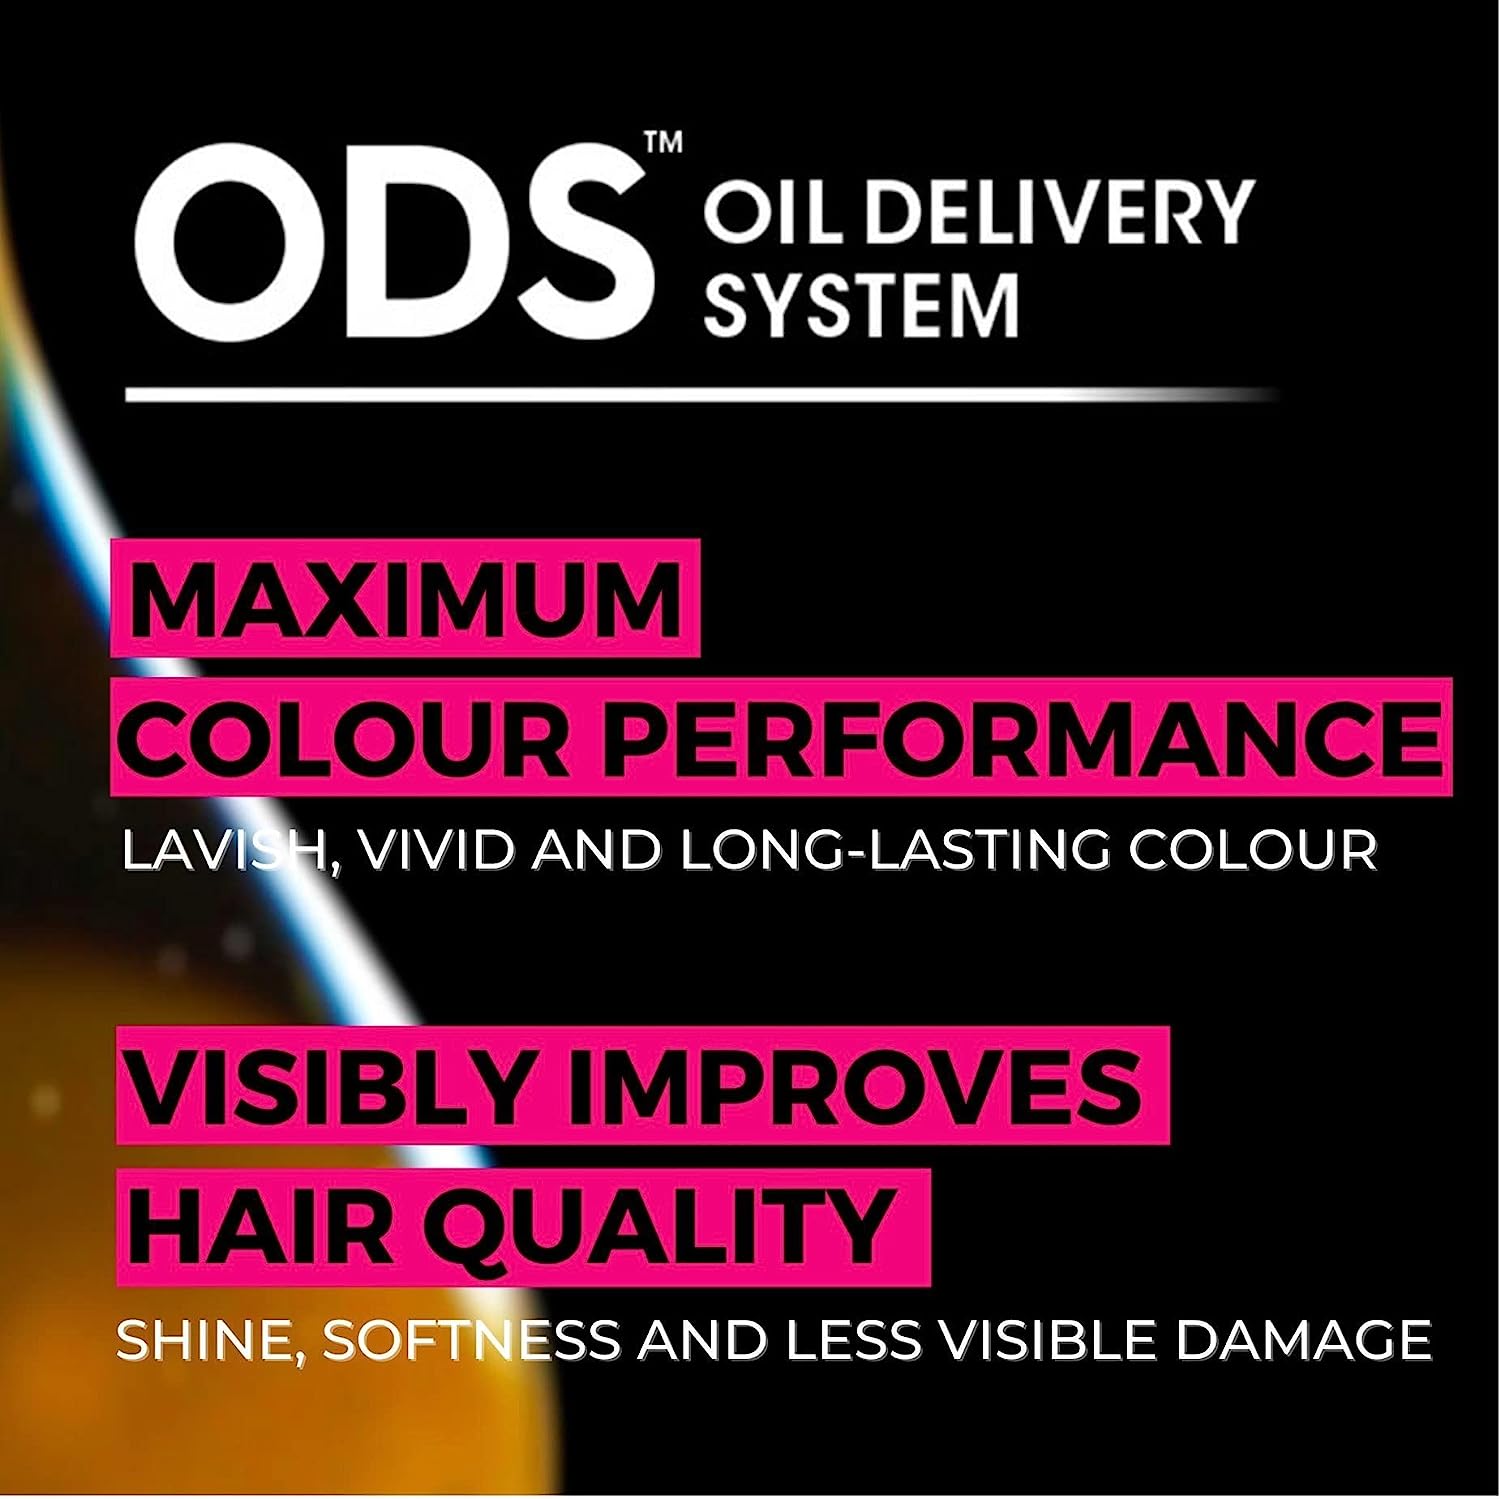 Garnier Olia 1.0 Black Diamond Permanent Hair Dye - Healthxpress.ie